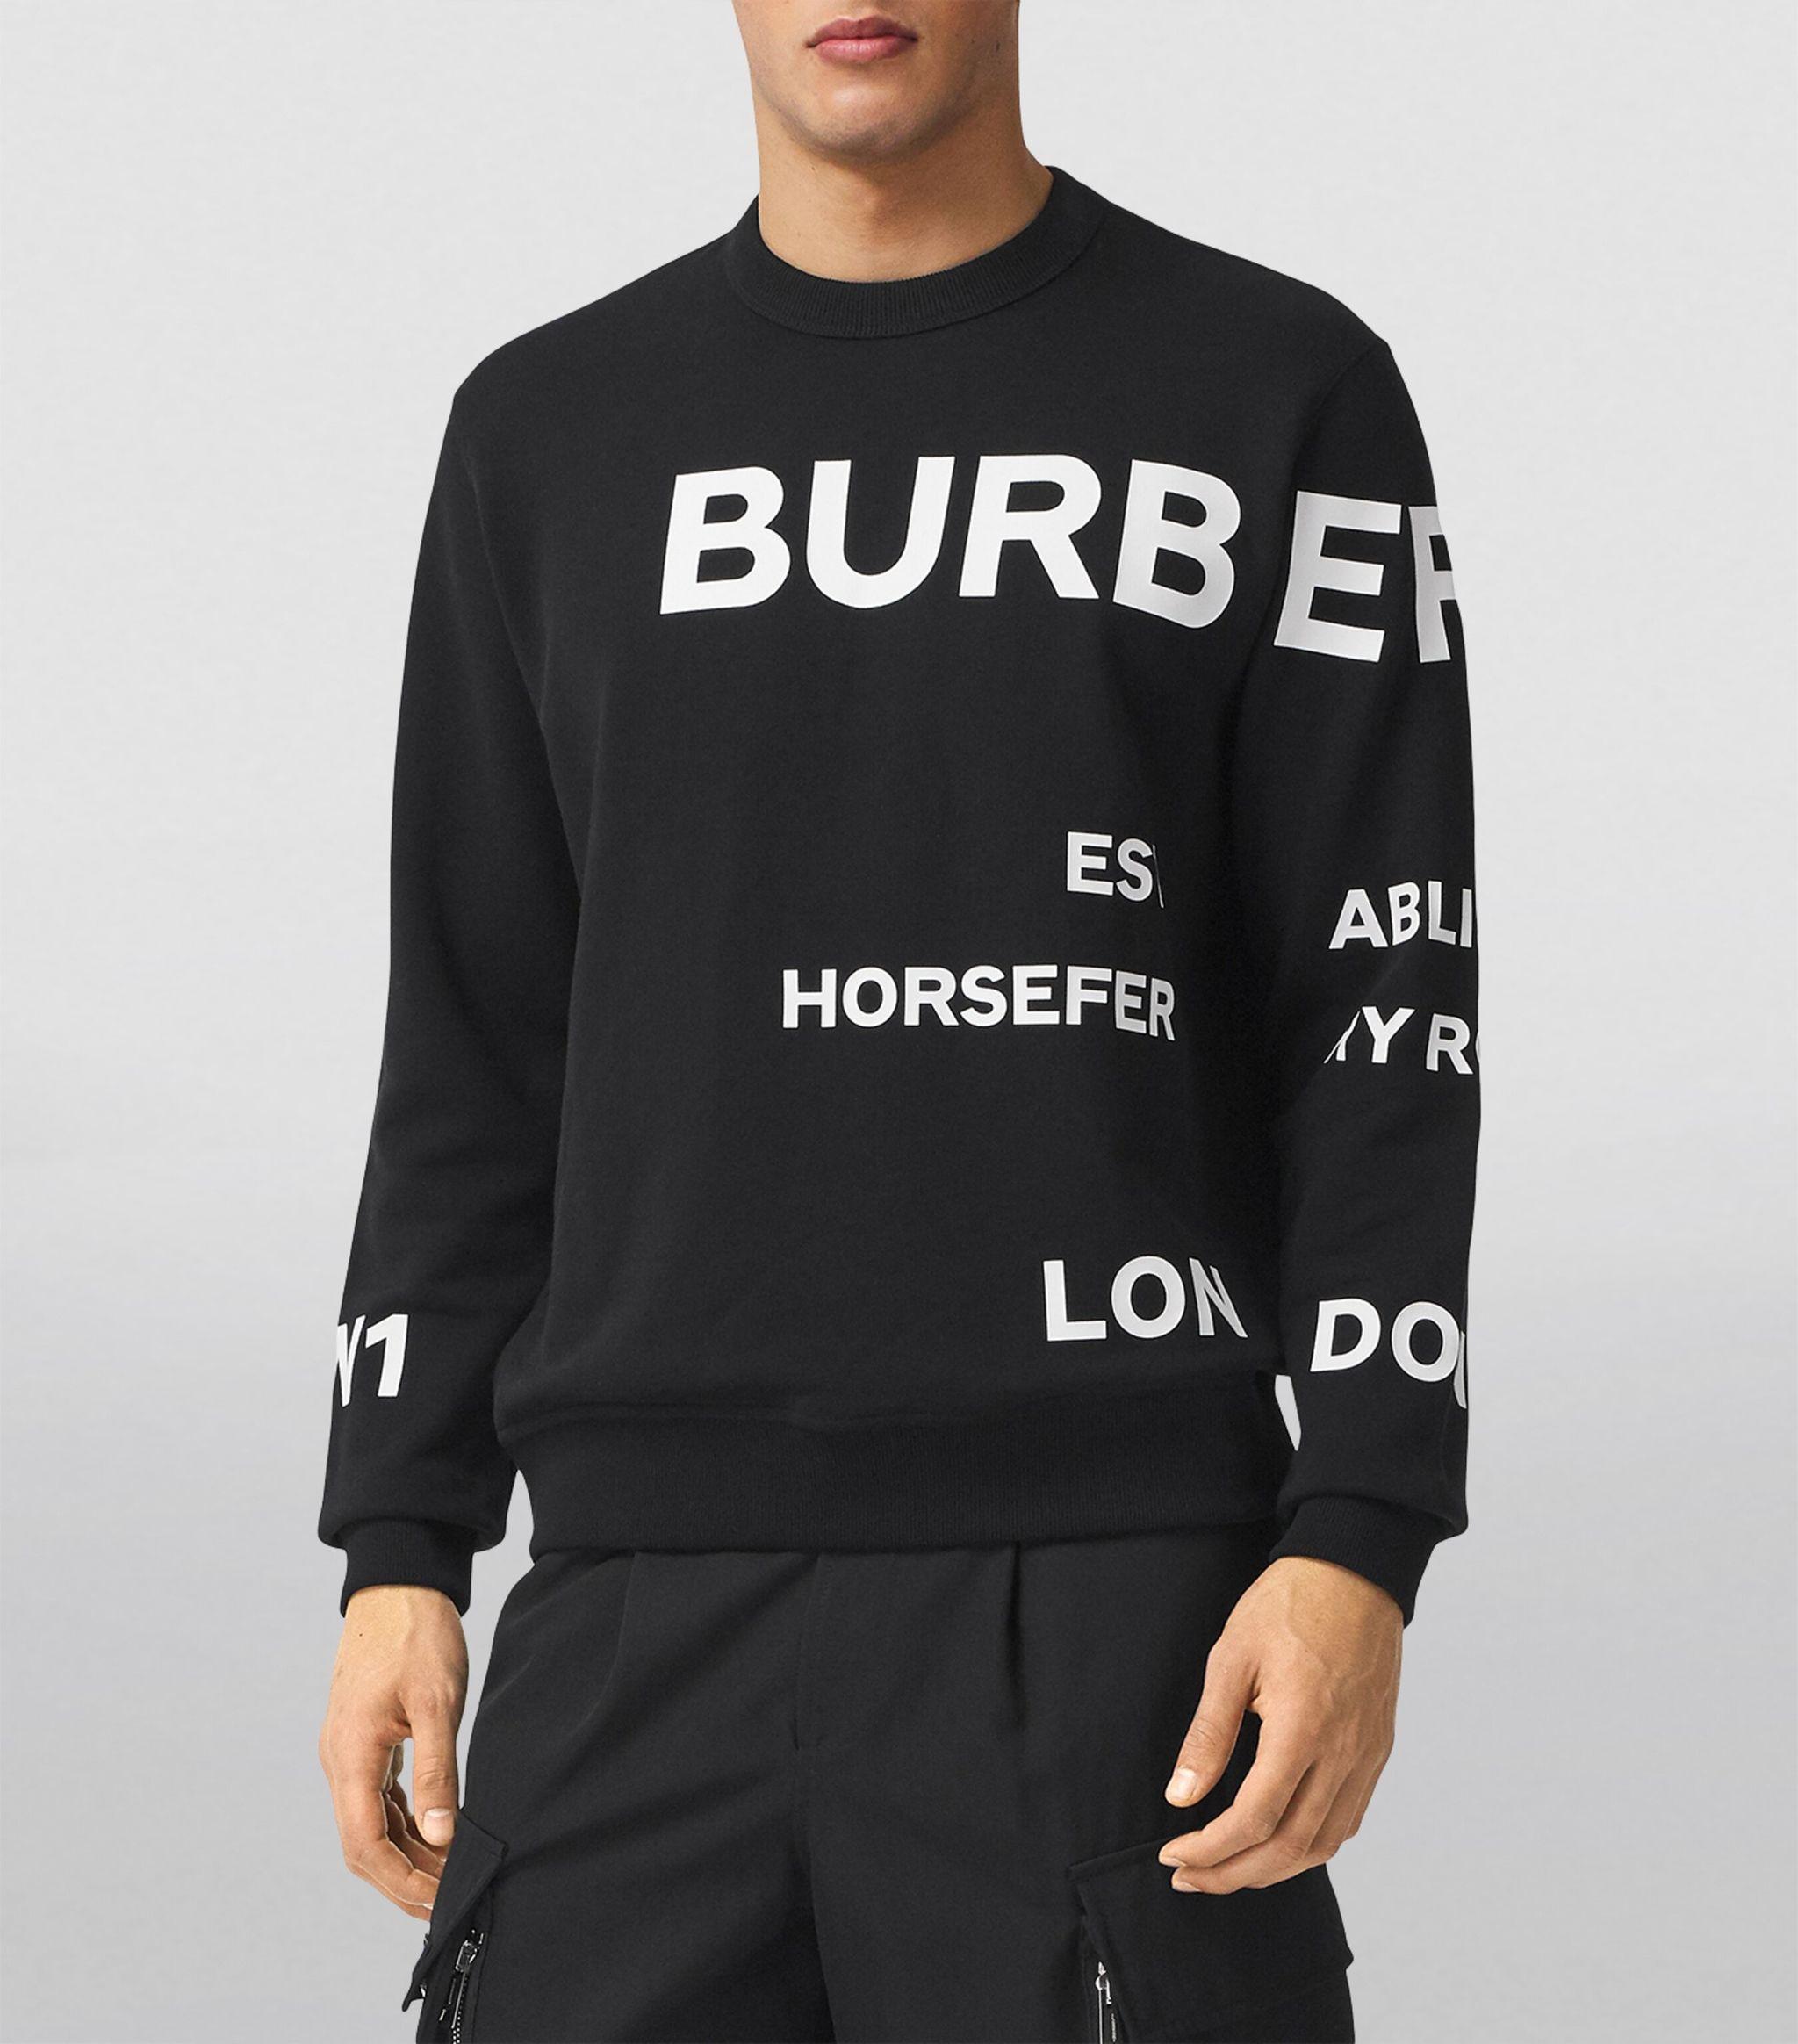 Burberry Horseferry Print Sweatshirt in Black for Men | Lyst